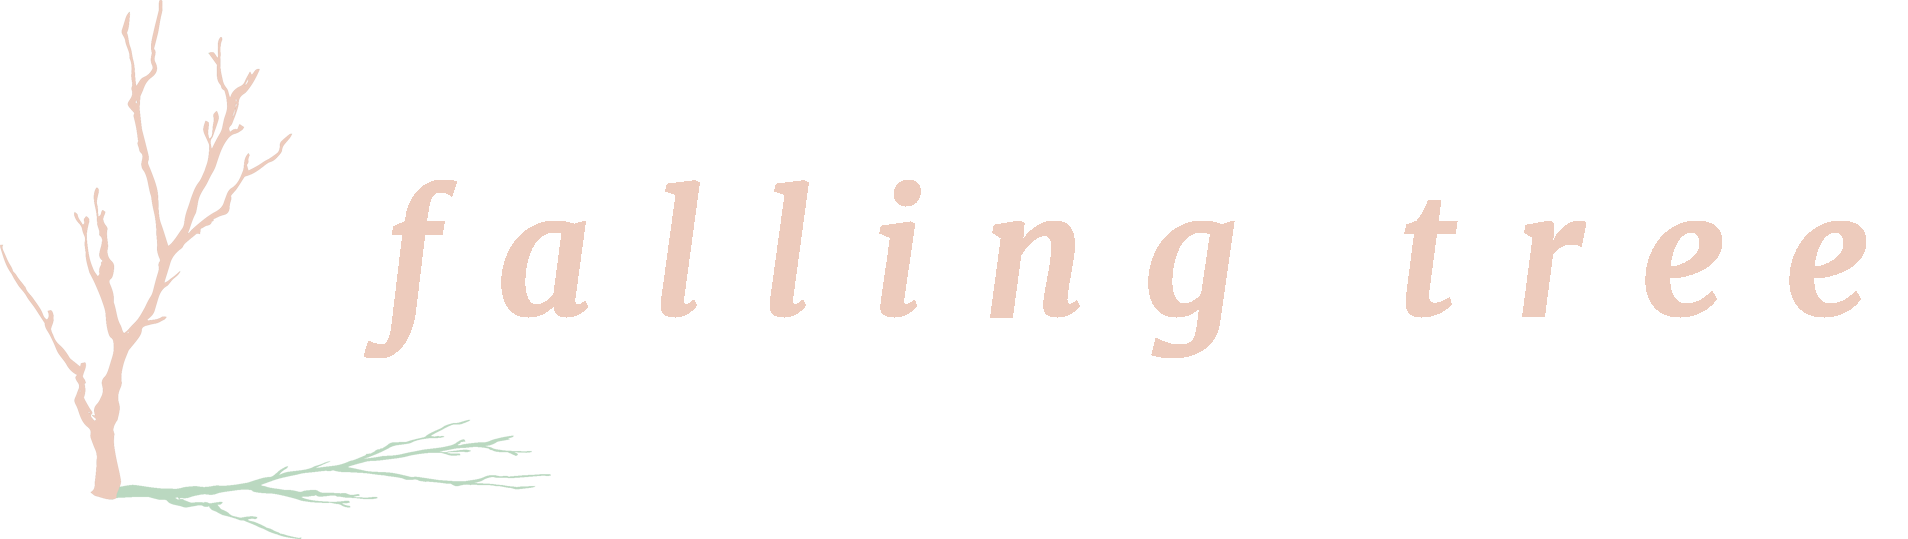 Falling Tree logo